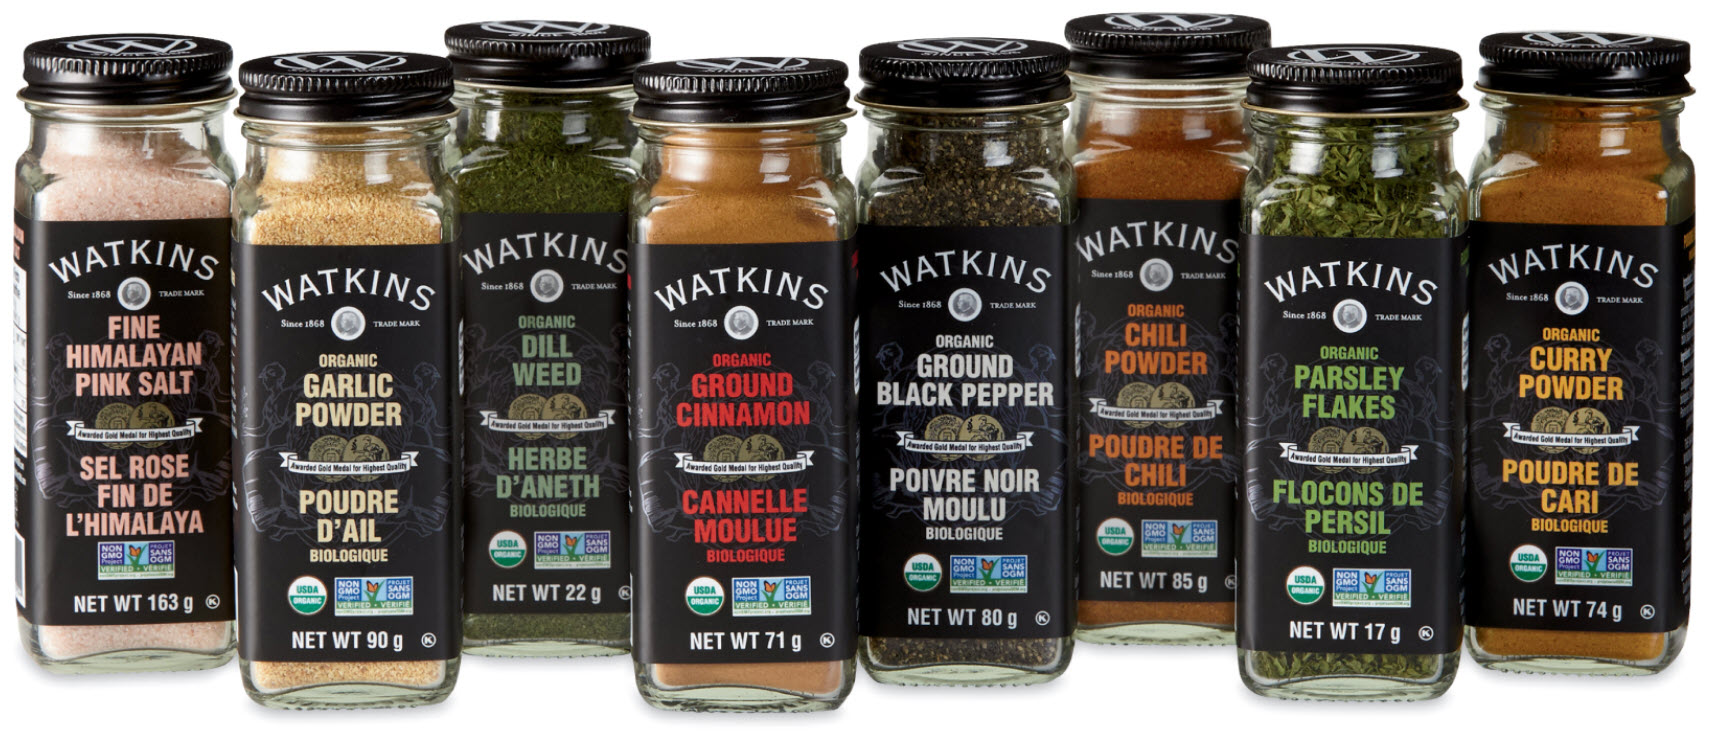 Watkins Organic Spices